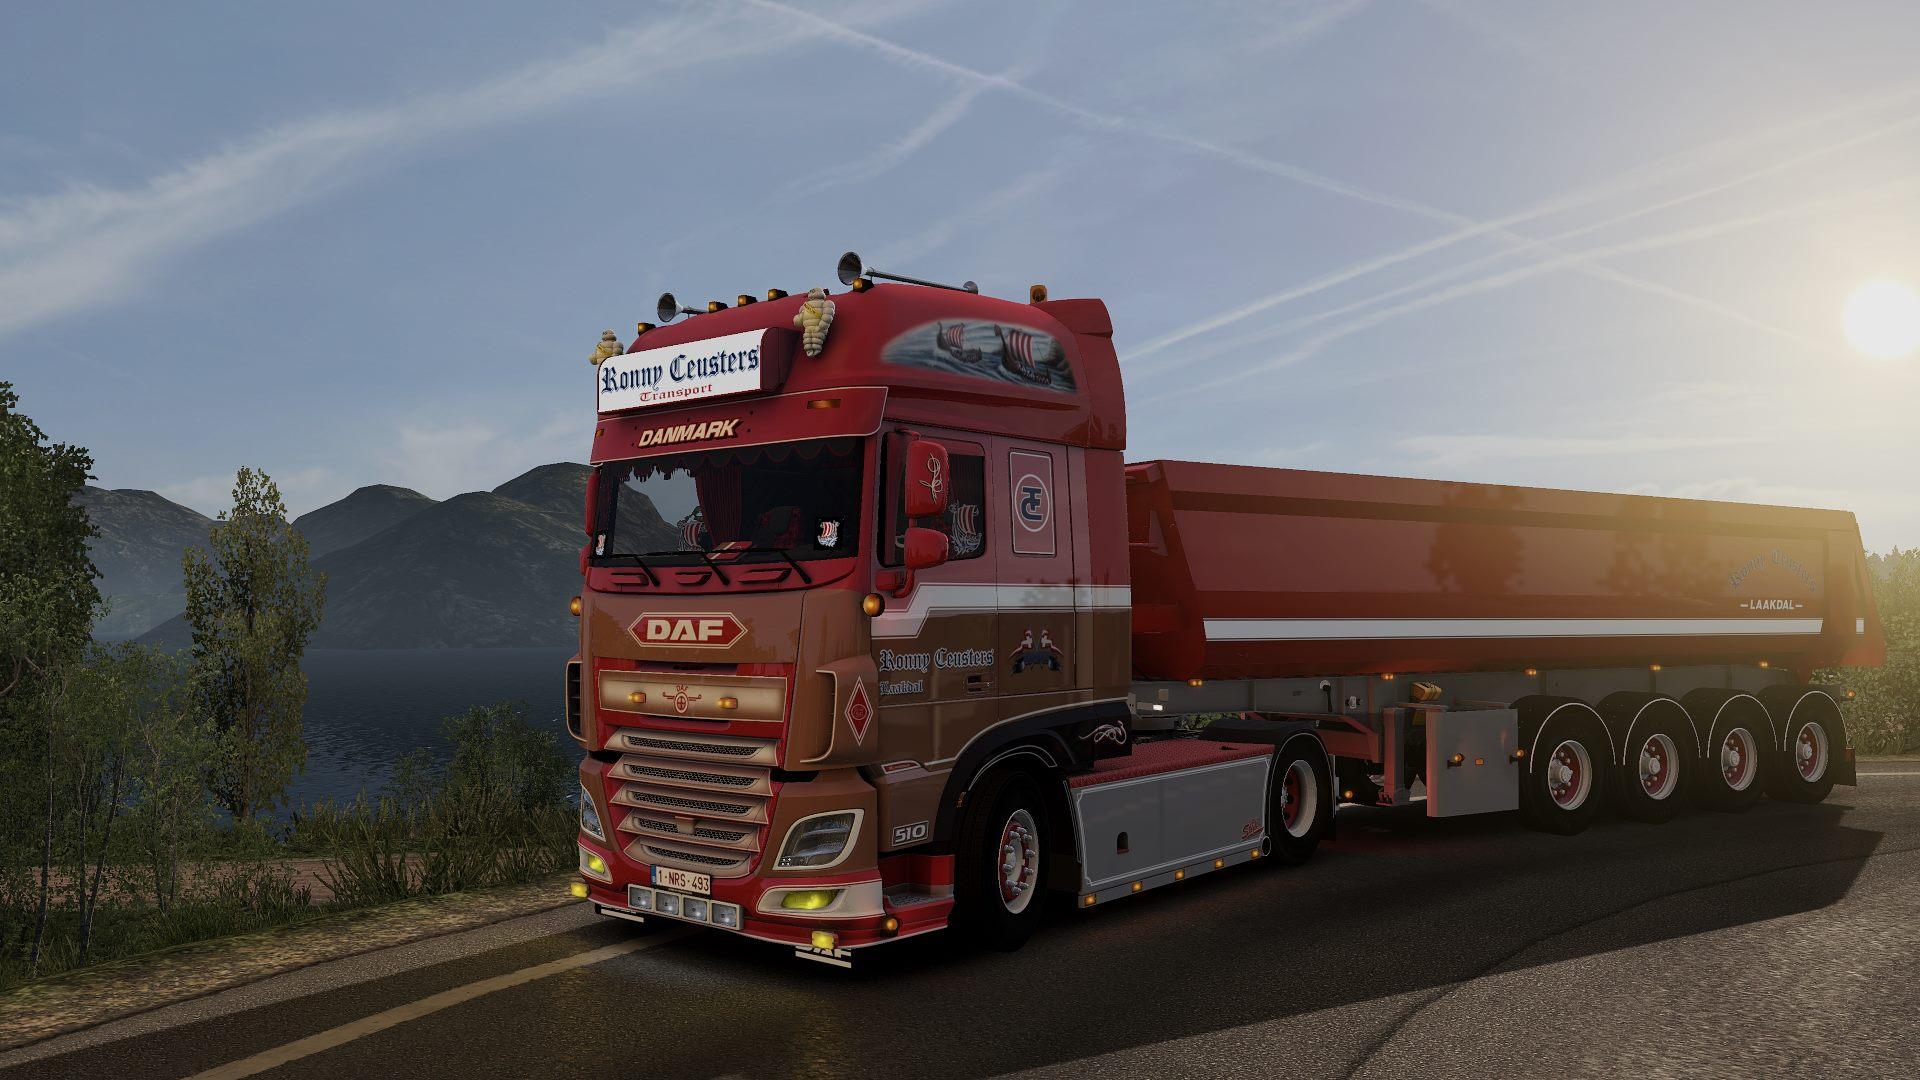 Daf & Trailer Ronny Ceusters Transport - Trailer Truck - HD Wallpaper 